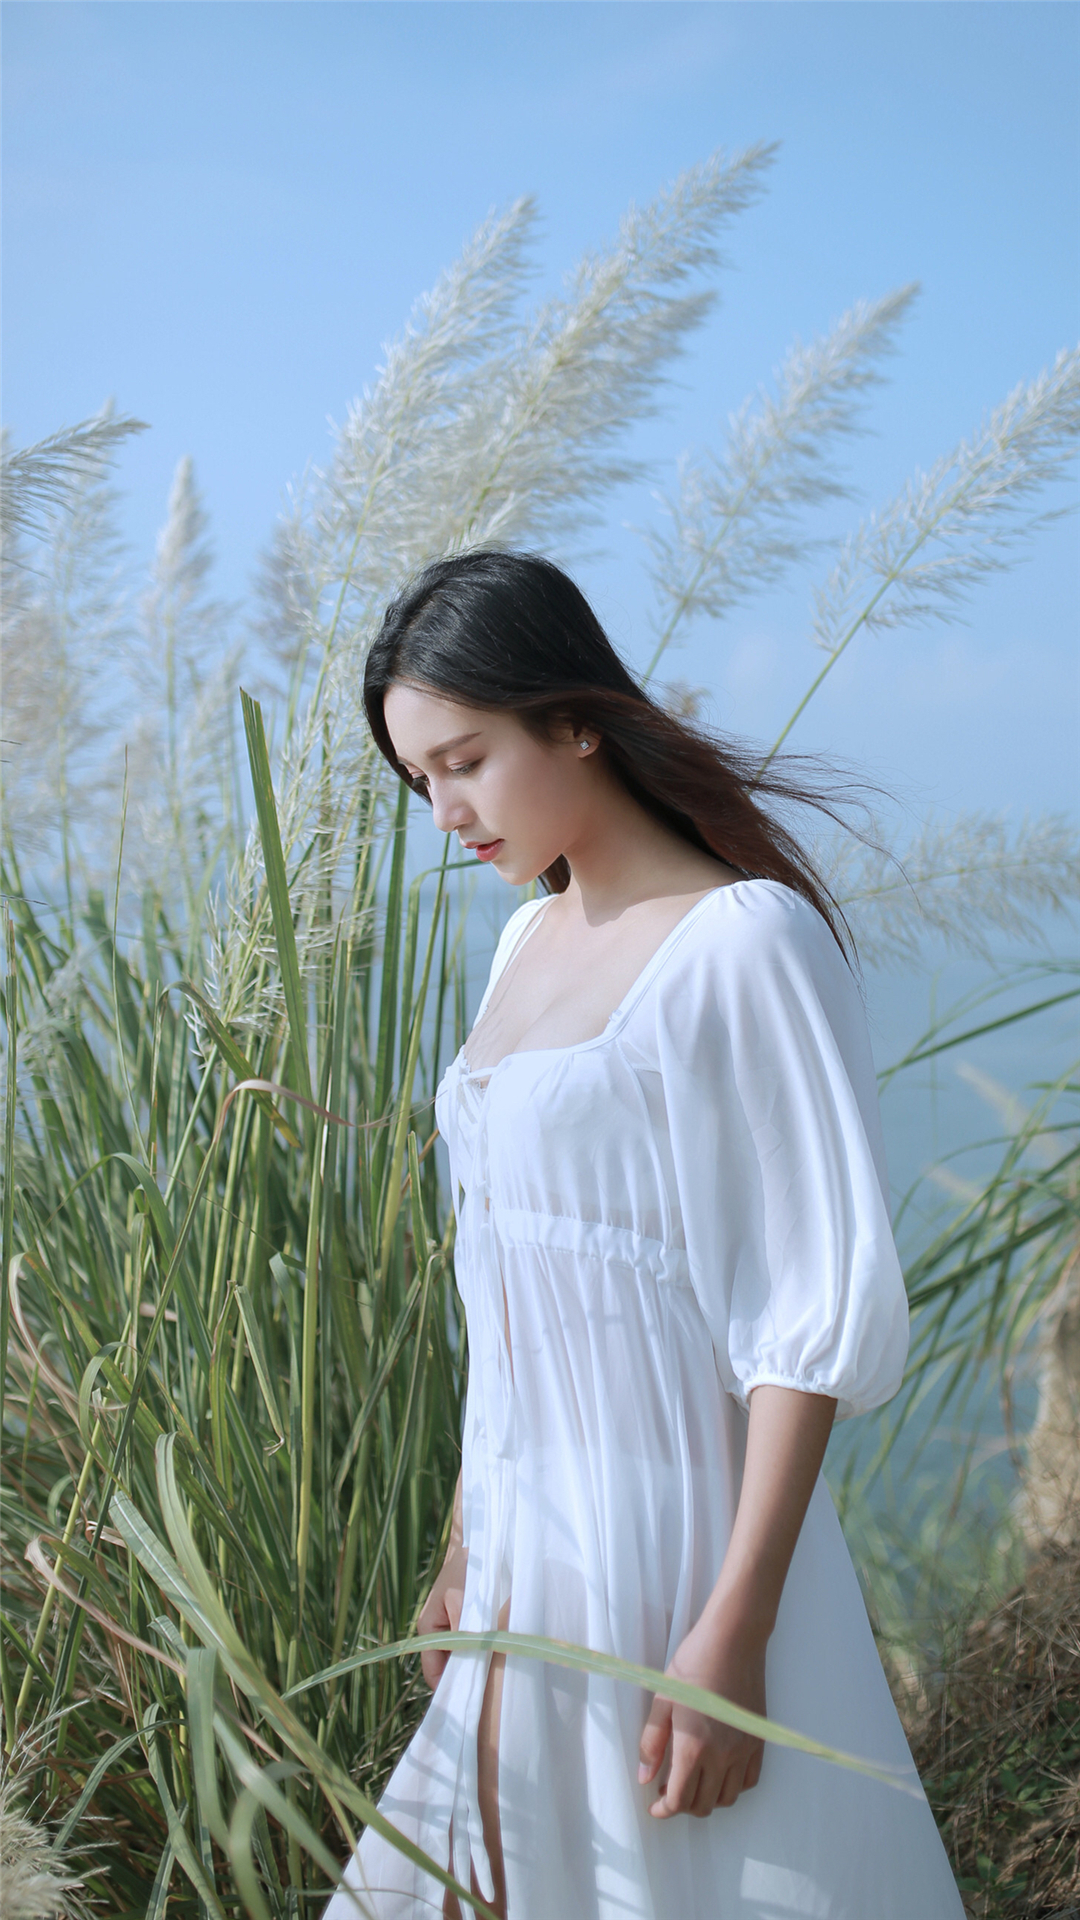 People 1080x1920 women Asian women outdoors see-through clothing white dress grass